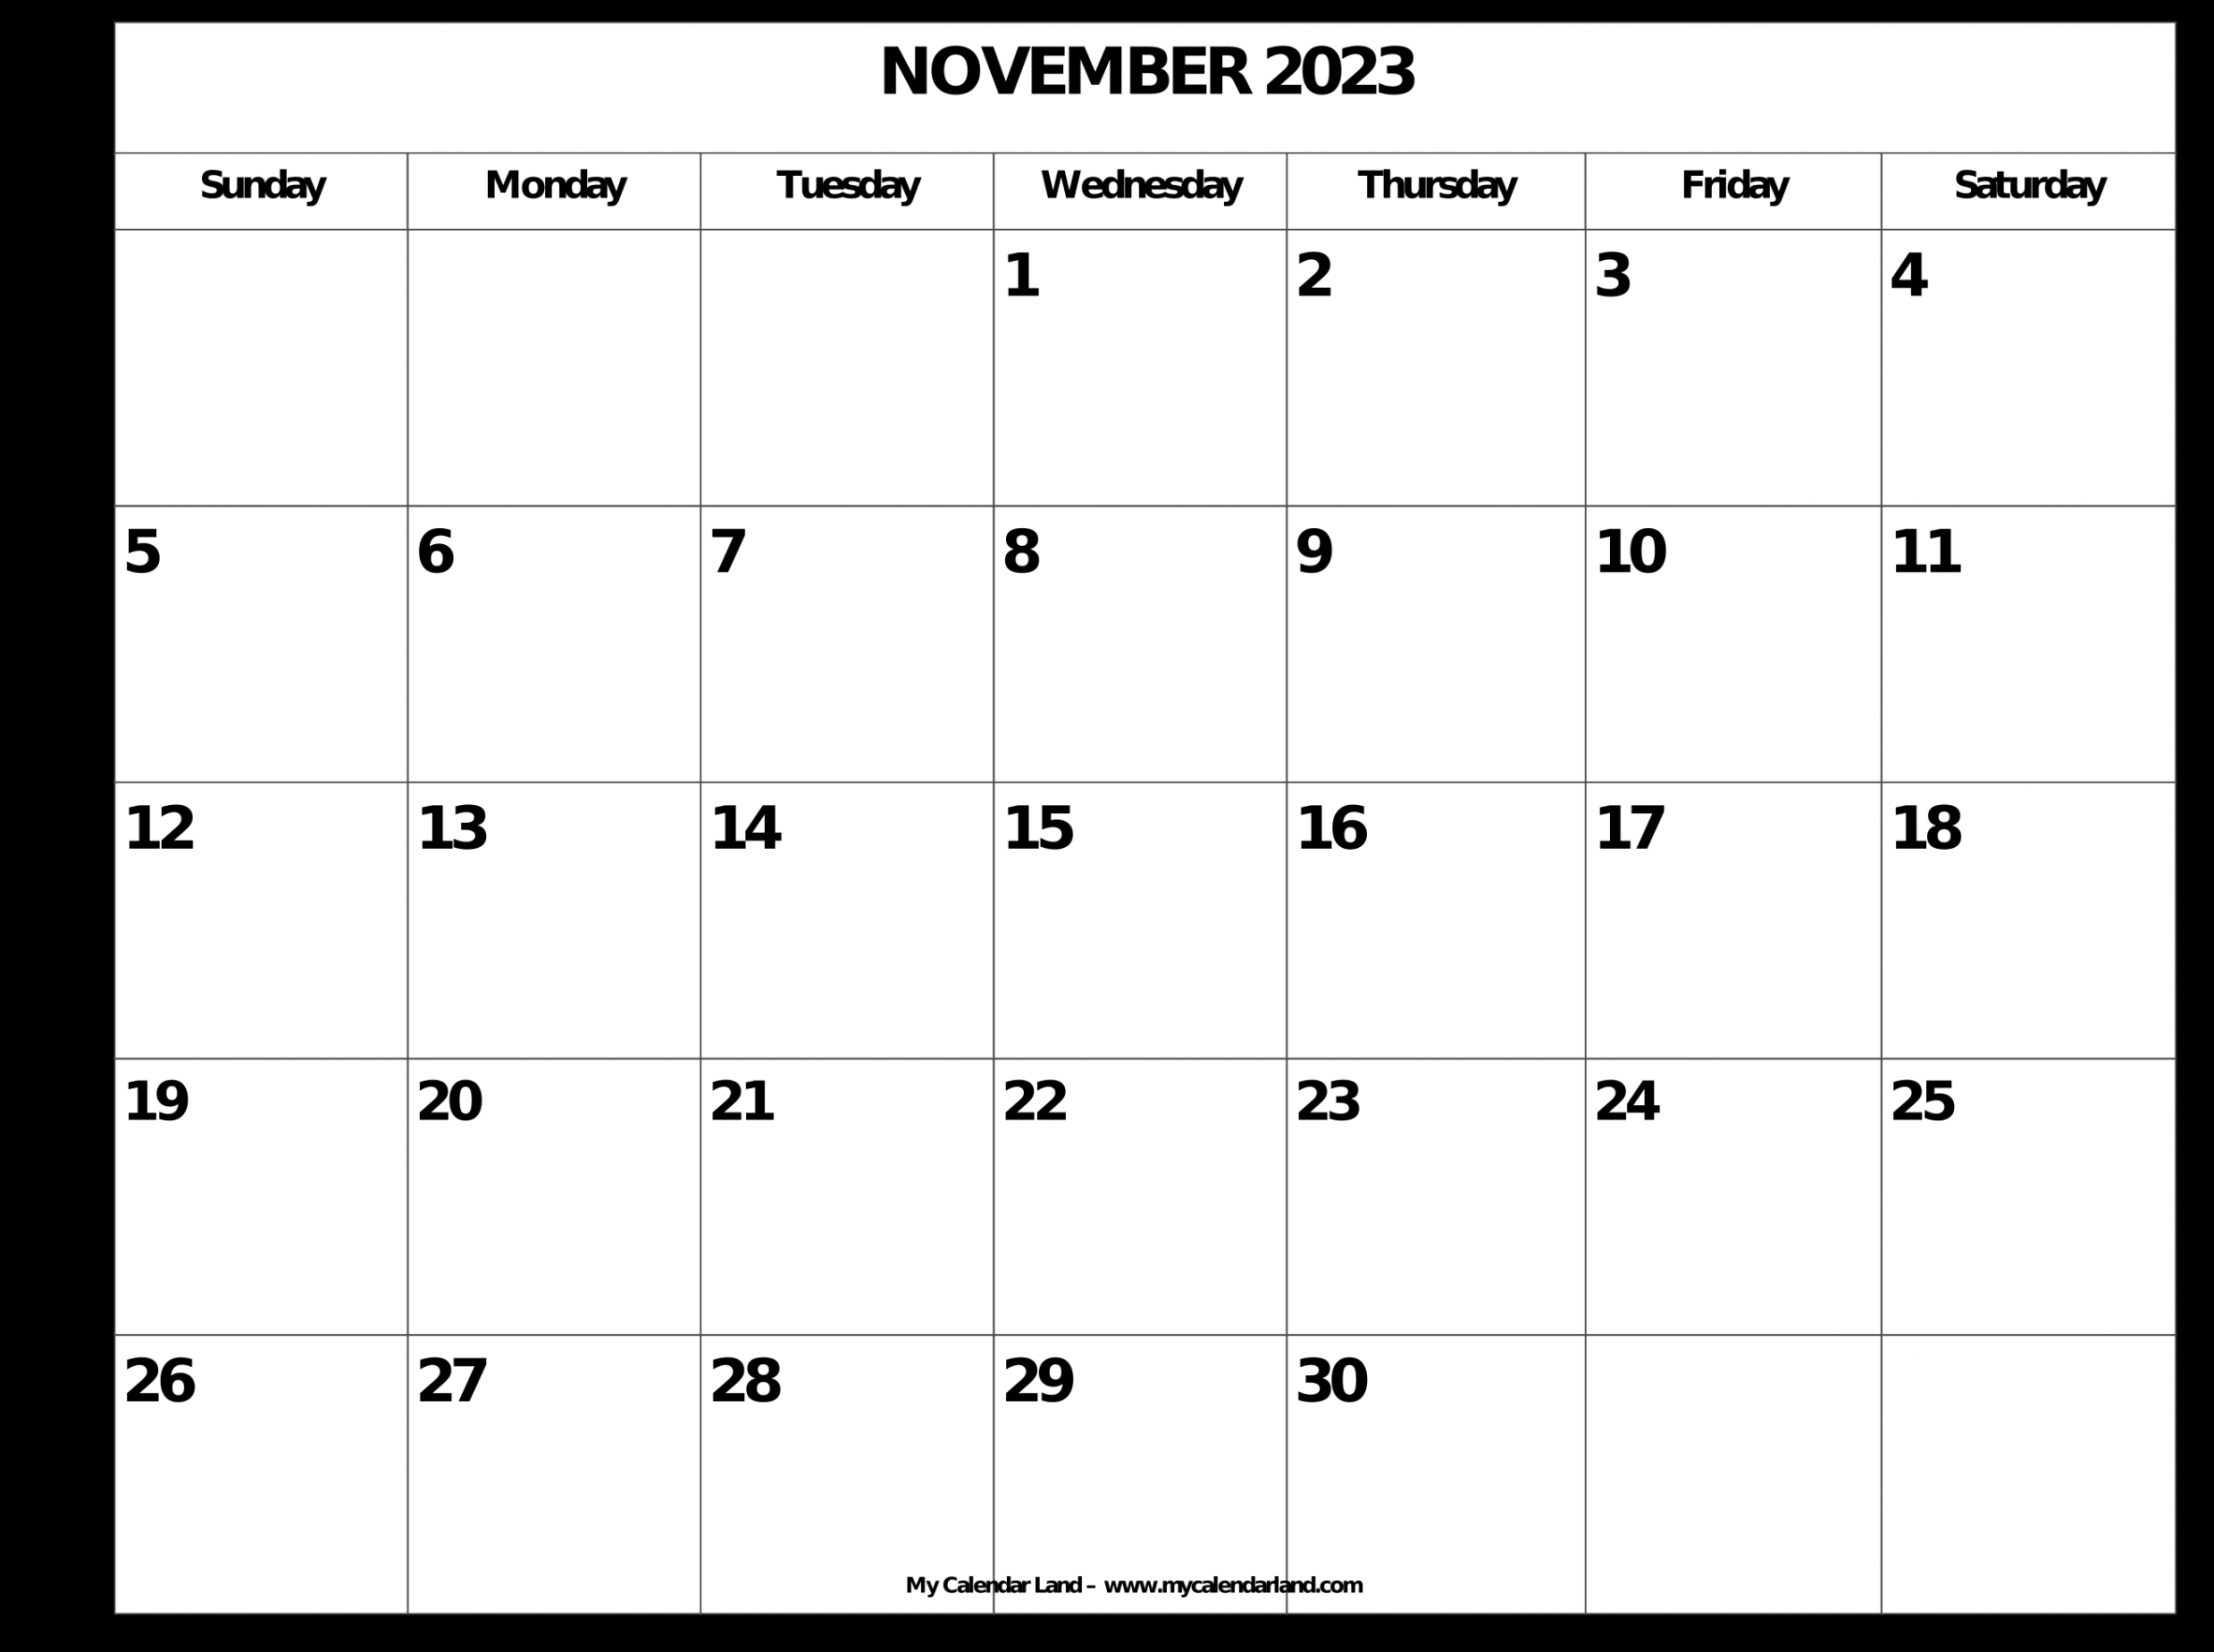 November  Calendar - My Calendar Land